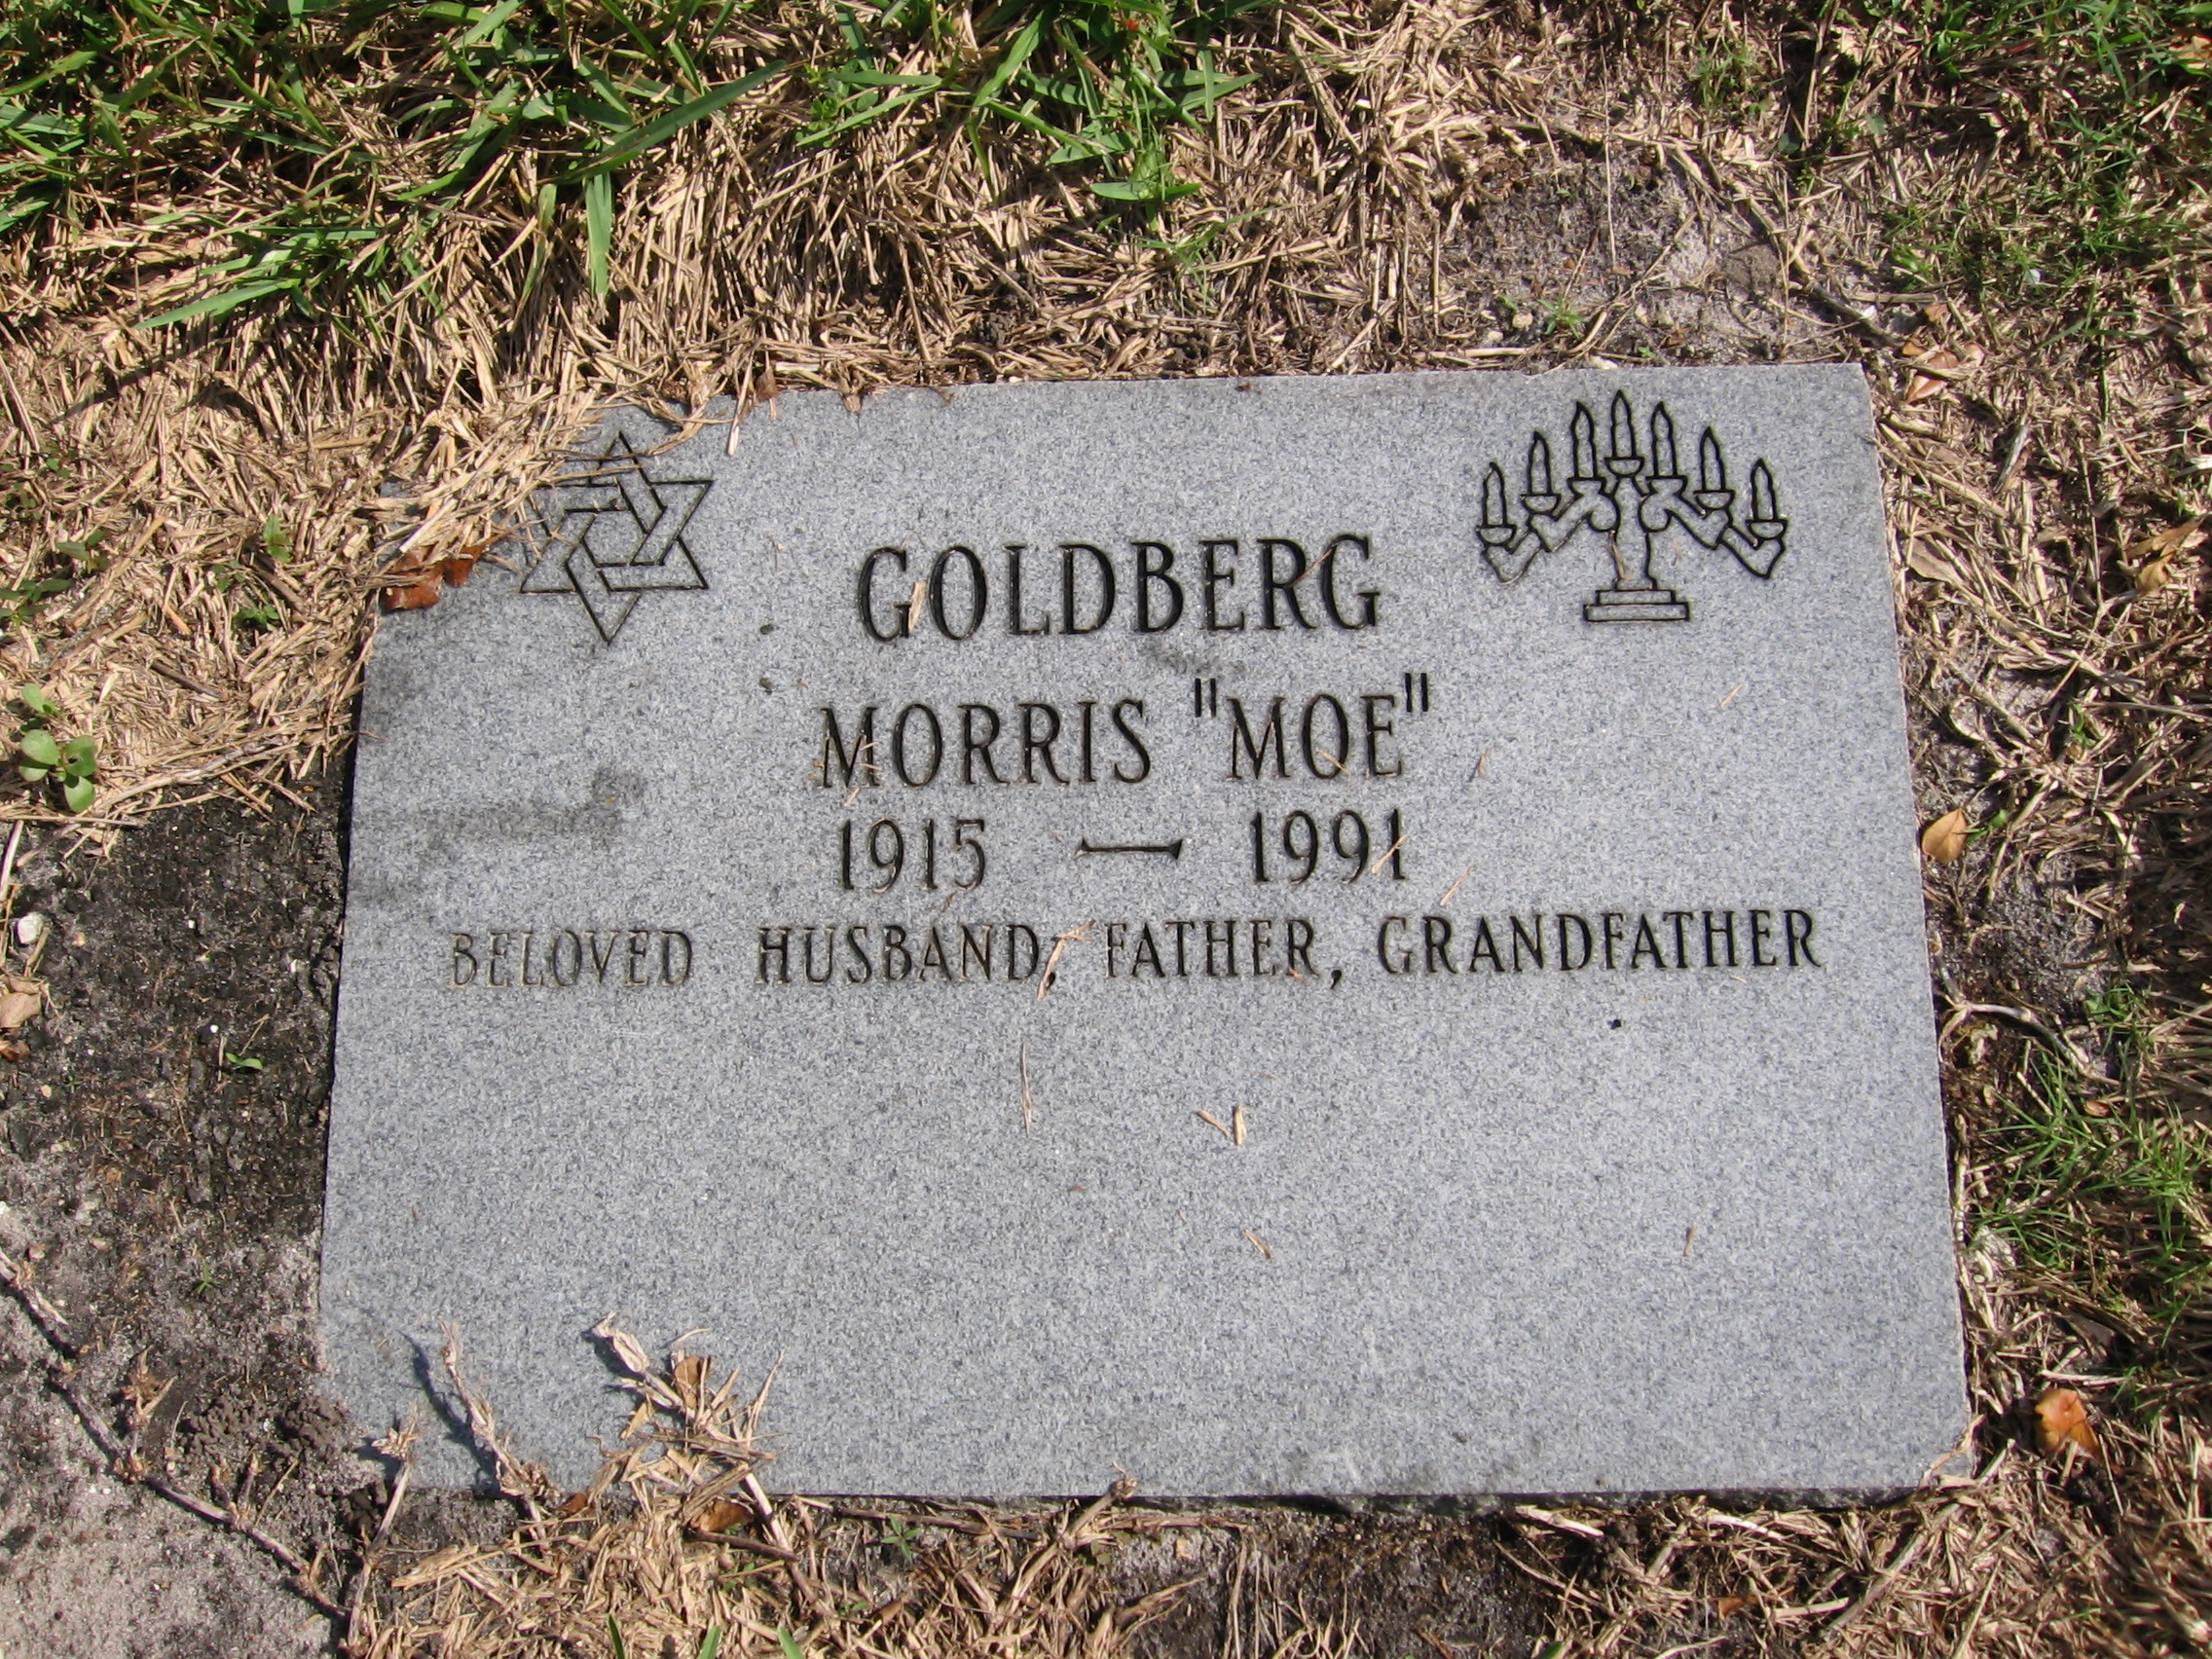 Morris "Moe" Goldberg